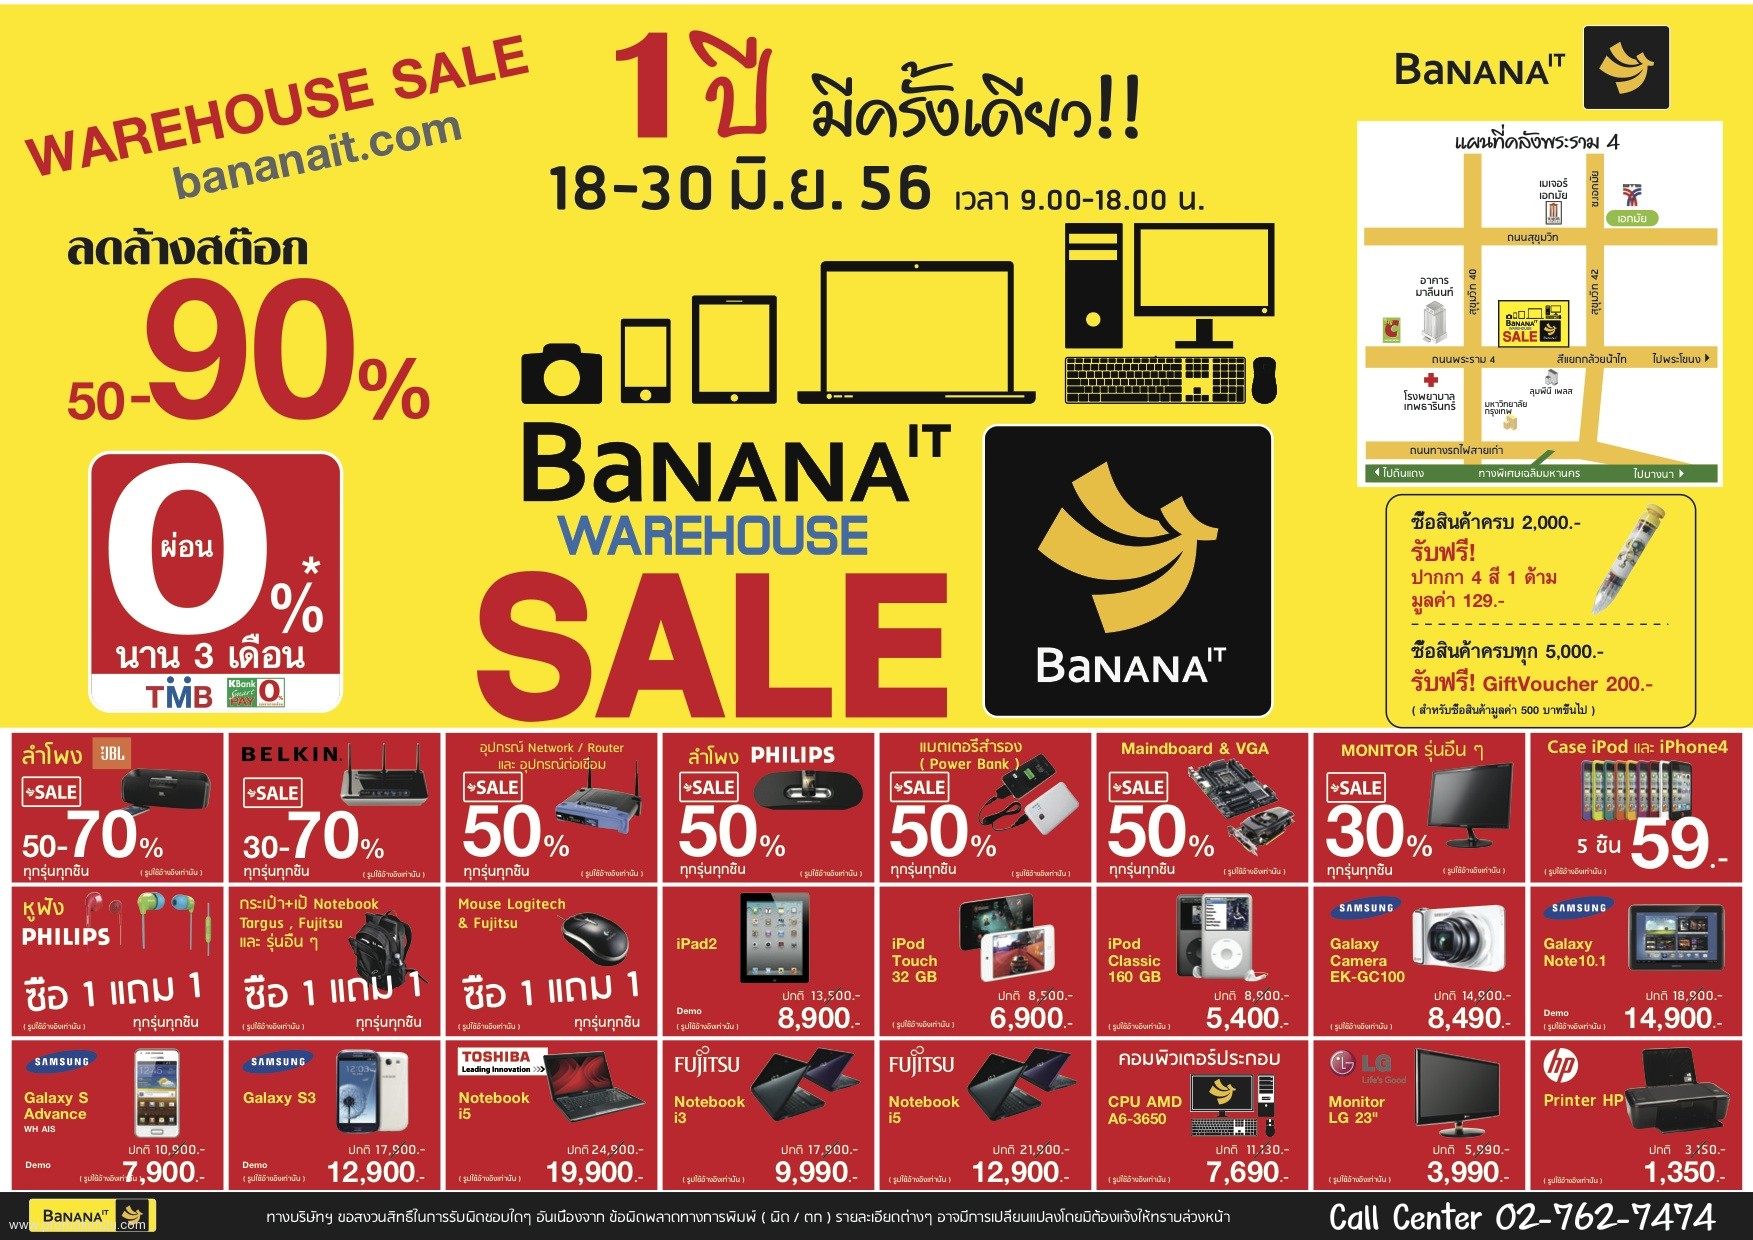 brochure promotion banana it warehouse sale up to 90 off jun 2013 full | IT | <!--:TH--></noscript>Promotion จากงาน Banana IT ตั้งแต่ 18-30 มิ.ย.วันนี้เป็นวันแรกกกก ลดกระจุย